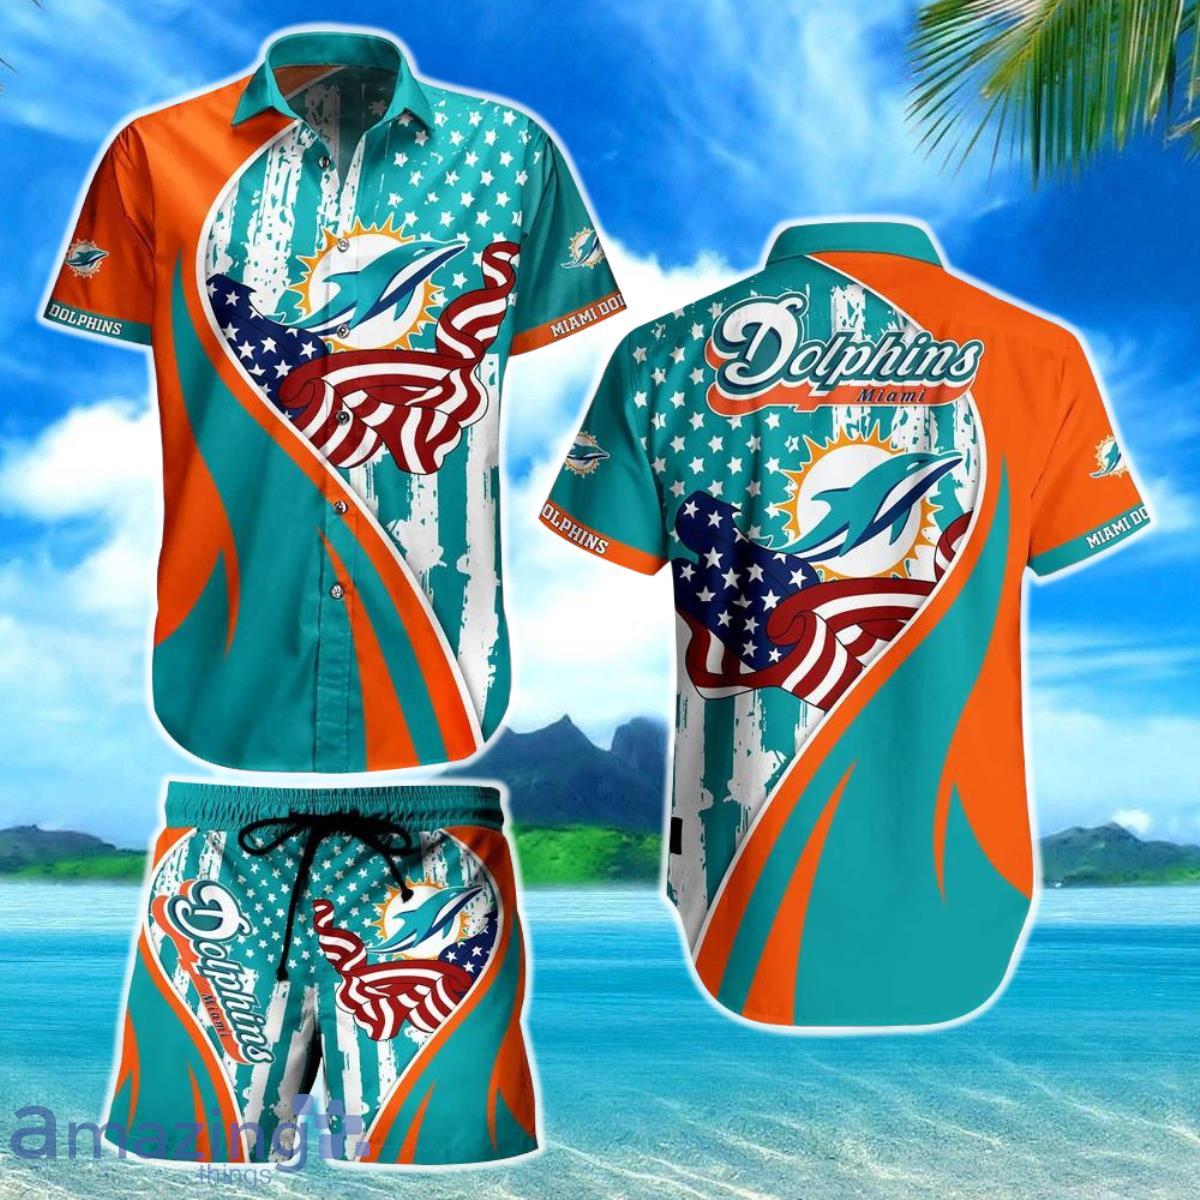 True Fan, Shirts, Vintage Retro Miami Dolphins Jersey